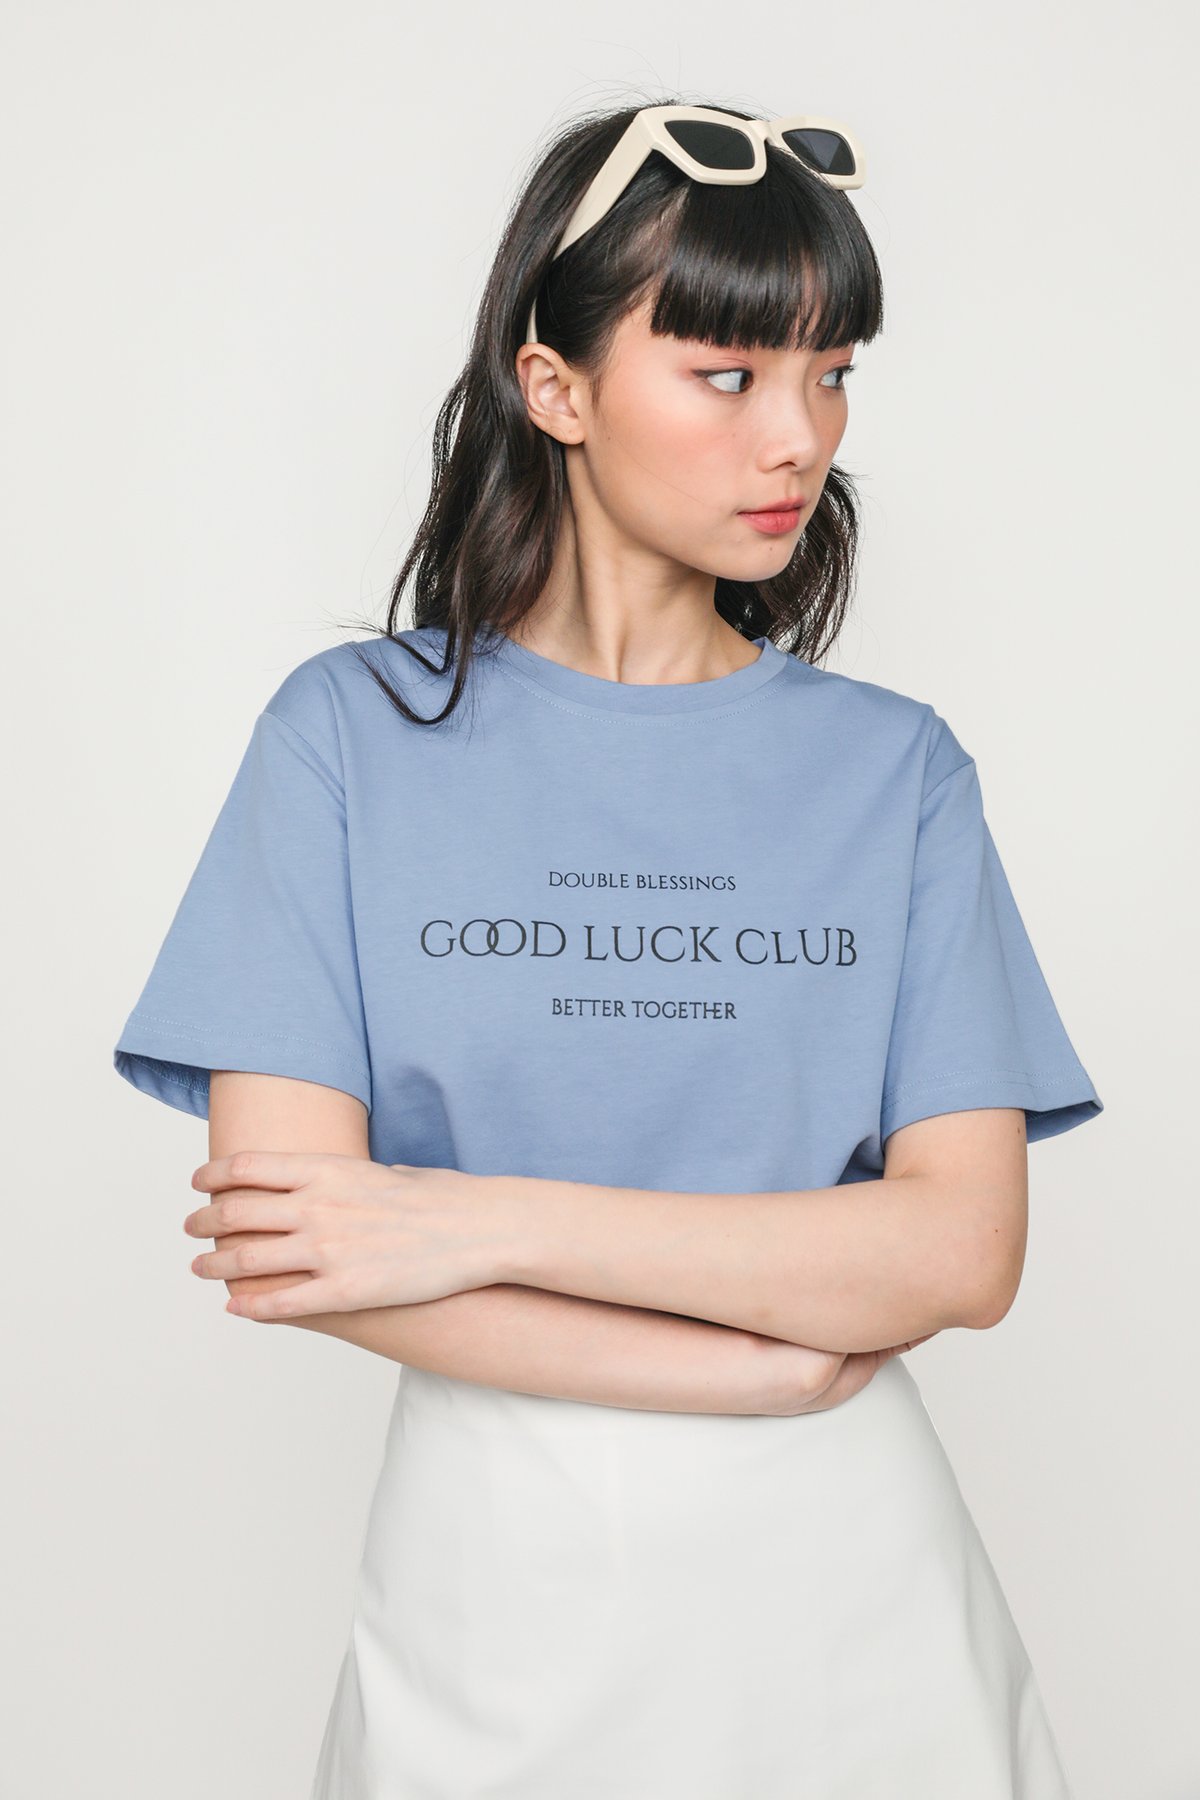 Good Luck Club Tee (Cornflower Blue)